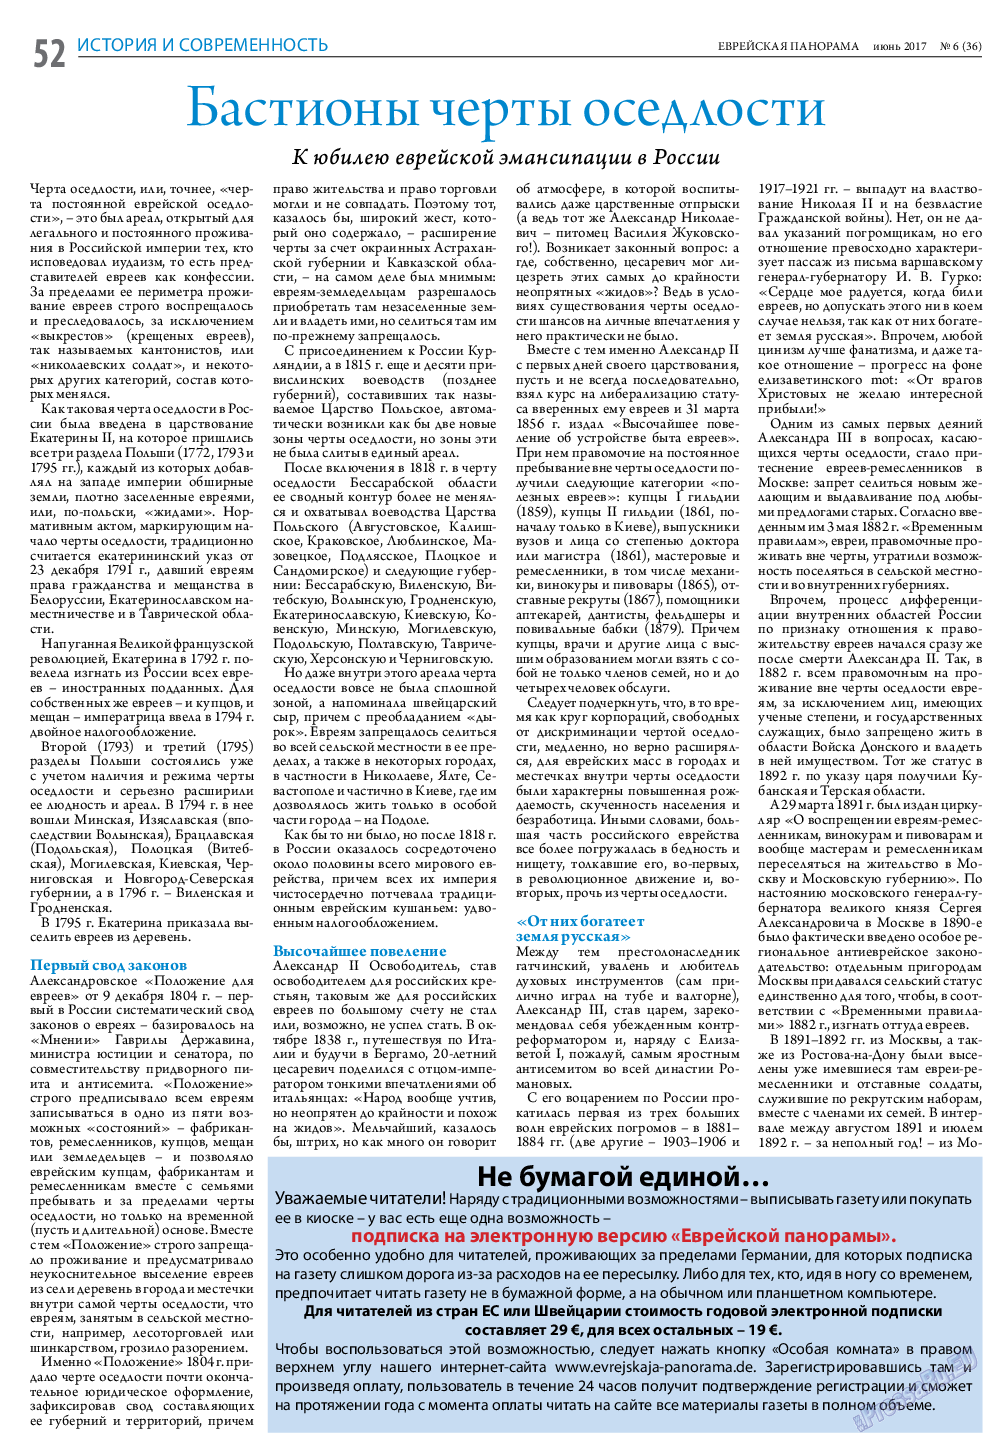 Еврейская панорама, газета. 2017 №6 стр.52